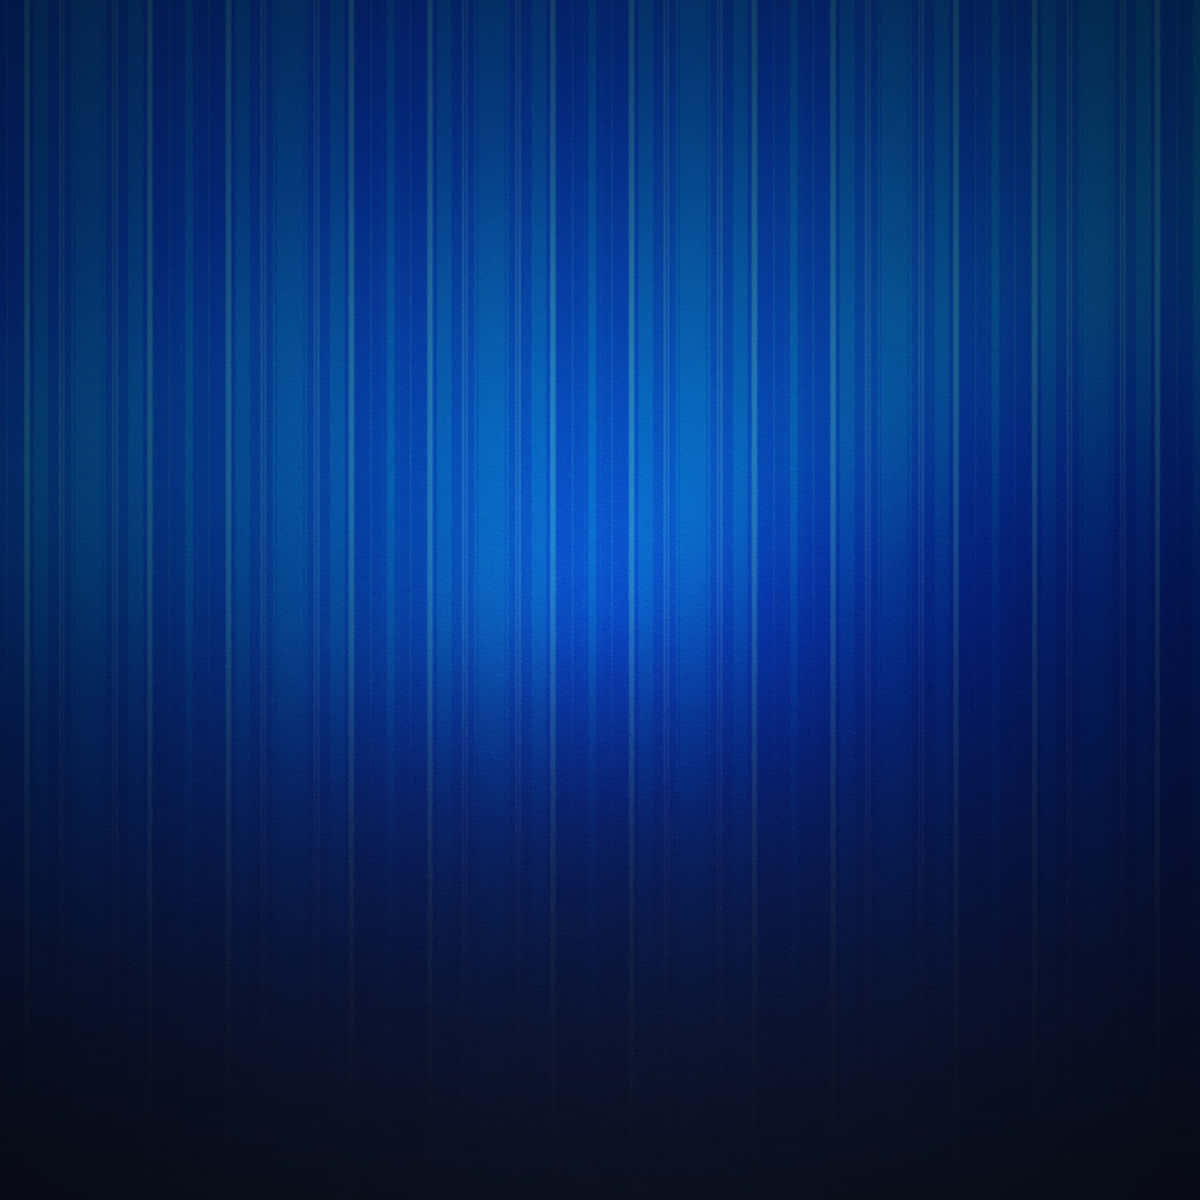 Oplysnatten Med Neonblå Farver